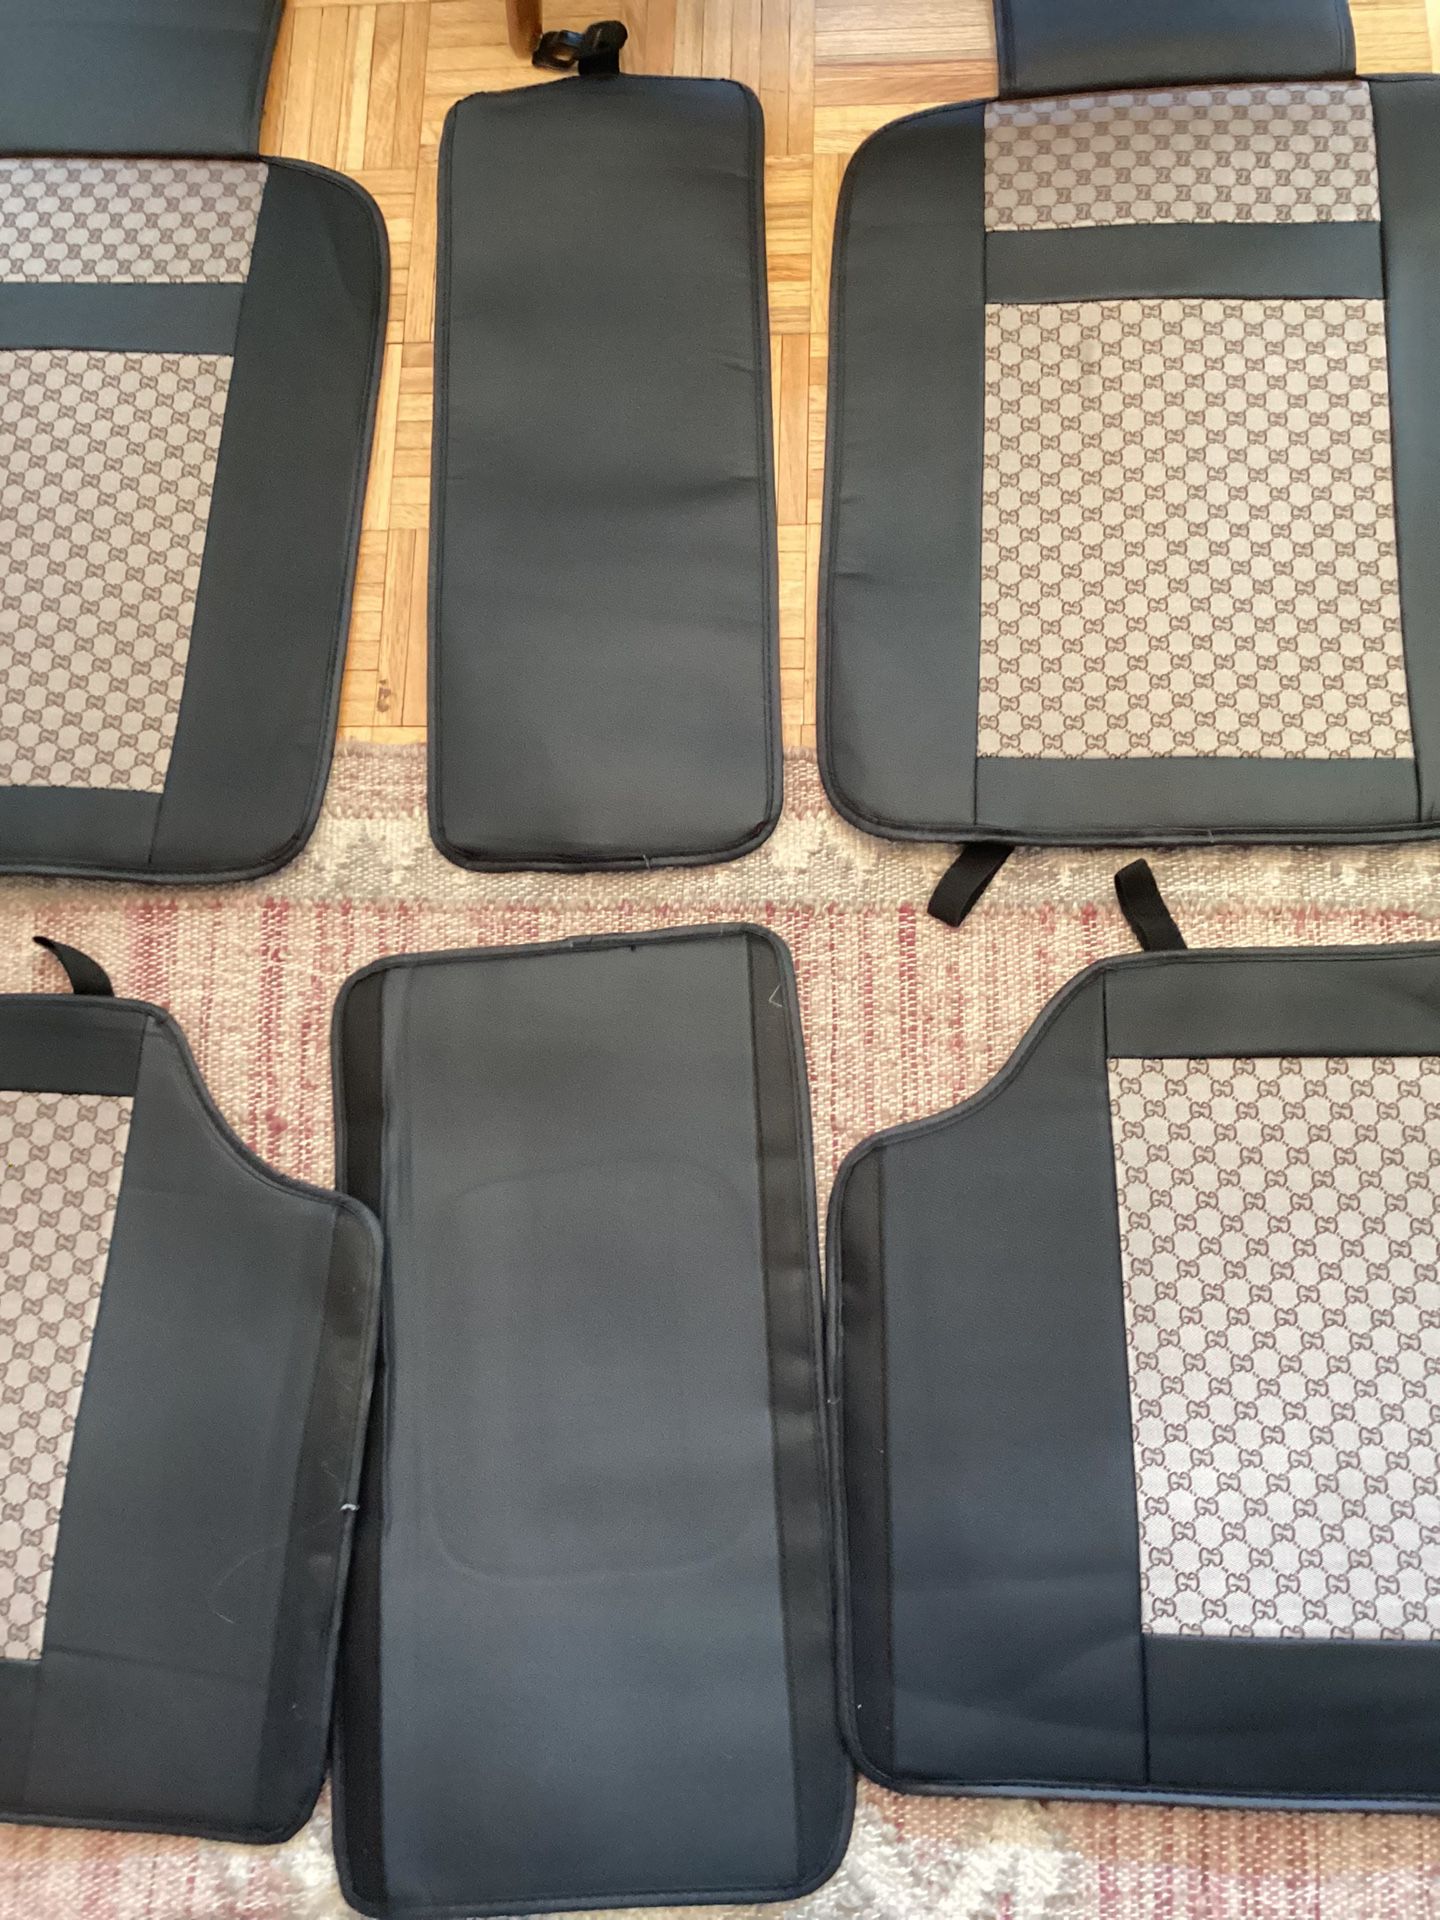 Luxury Gucci Monogram Signature Beige Pattern Car Seat Covers Full Set -  Mugteeco